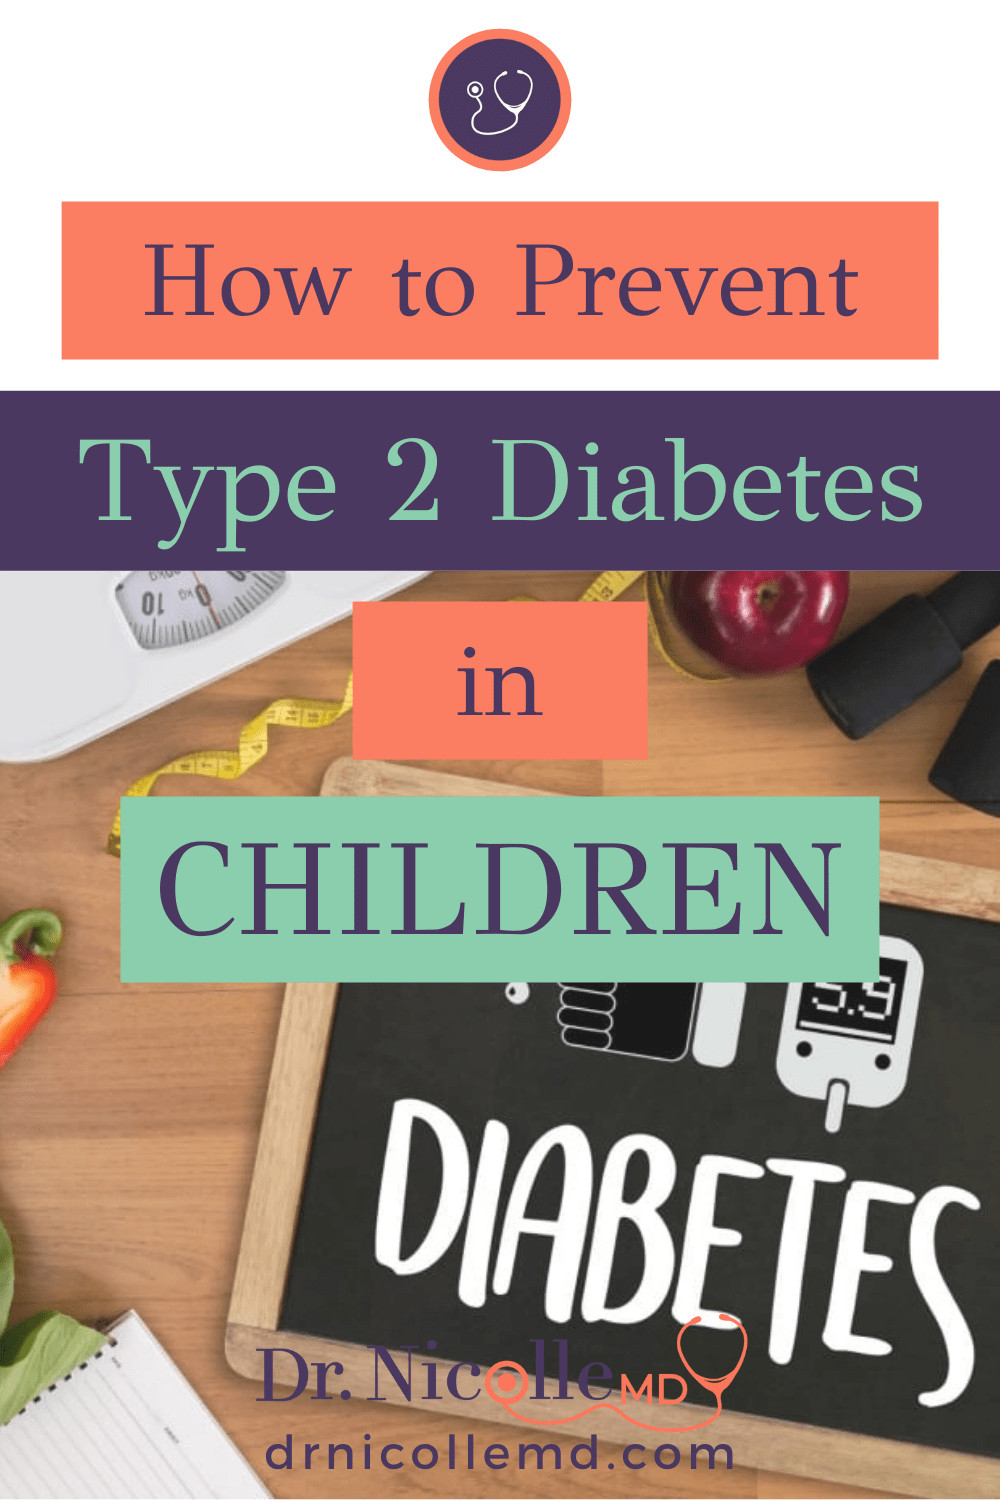 How to Prevent Type 2 Diabetes in Children